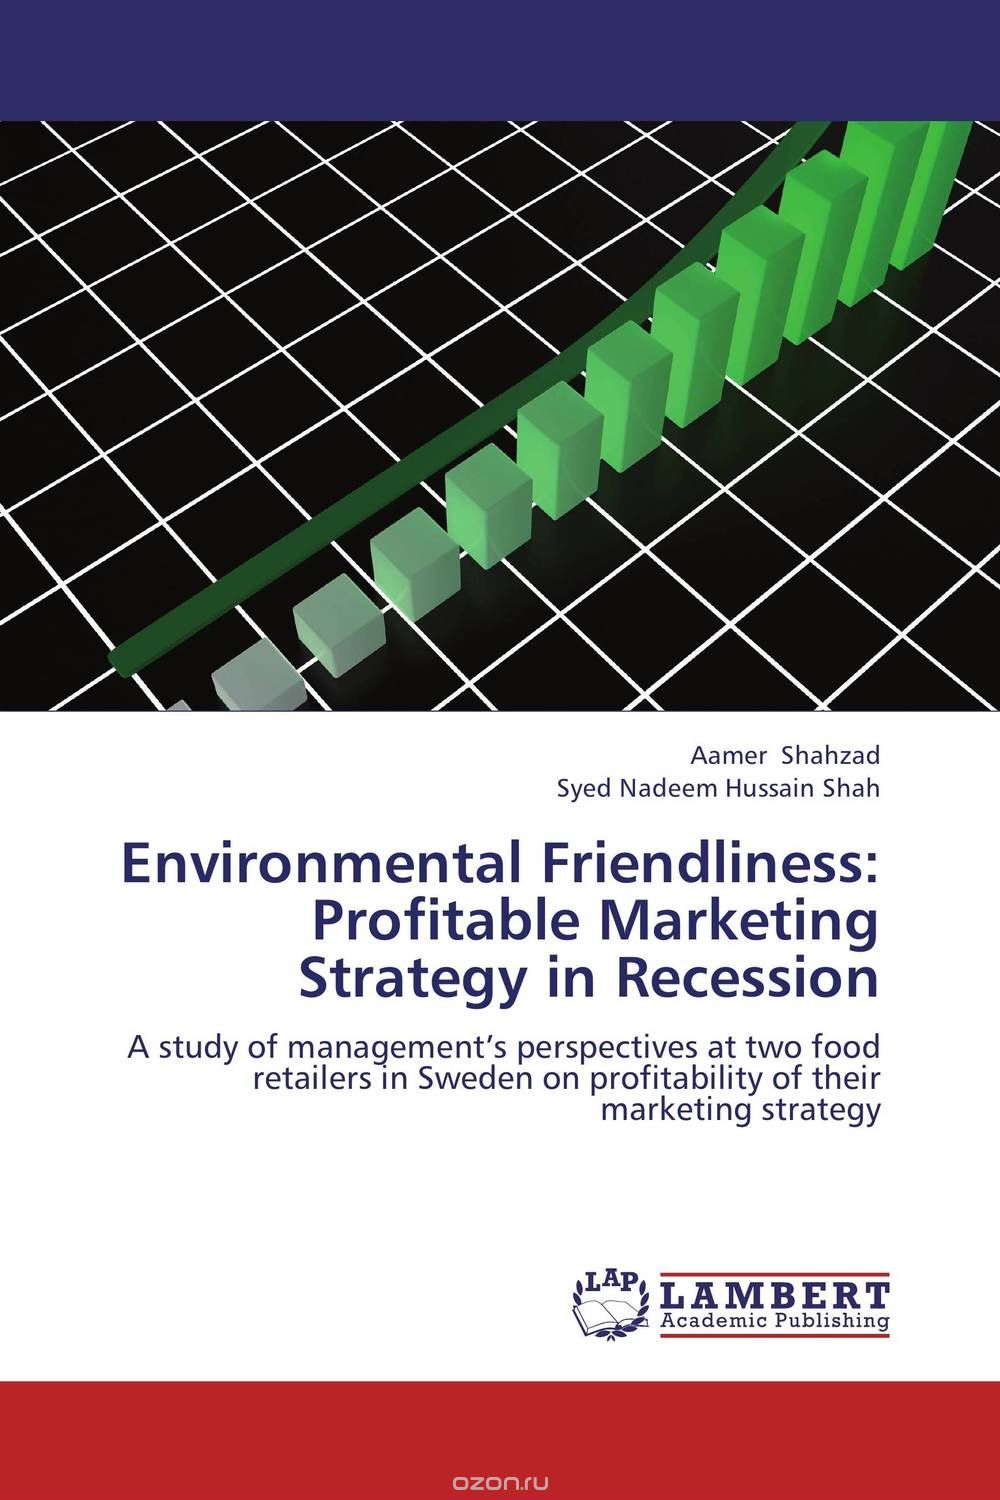 Скачать книгу "Environmental Friendliness: Profitable Marketing Strategy in Recession"